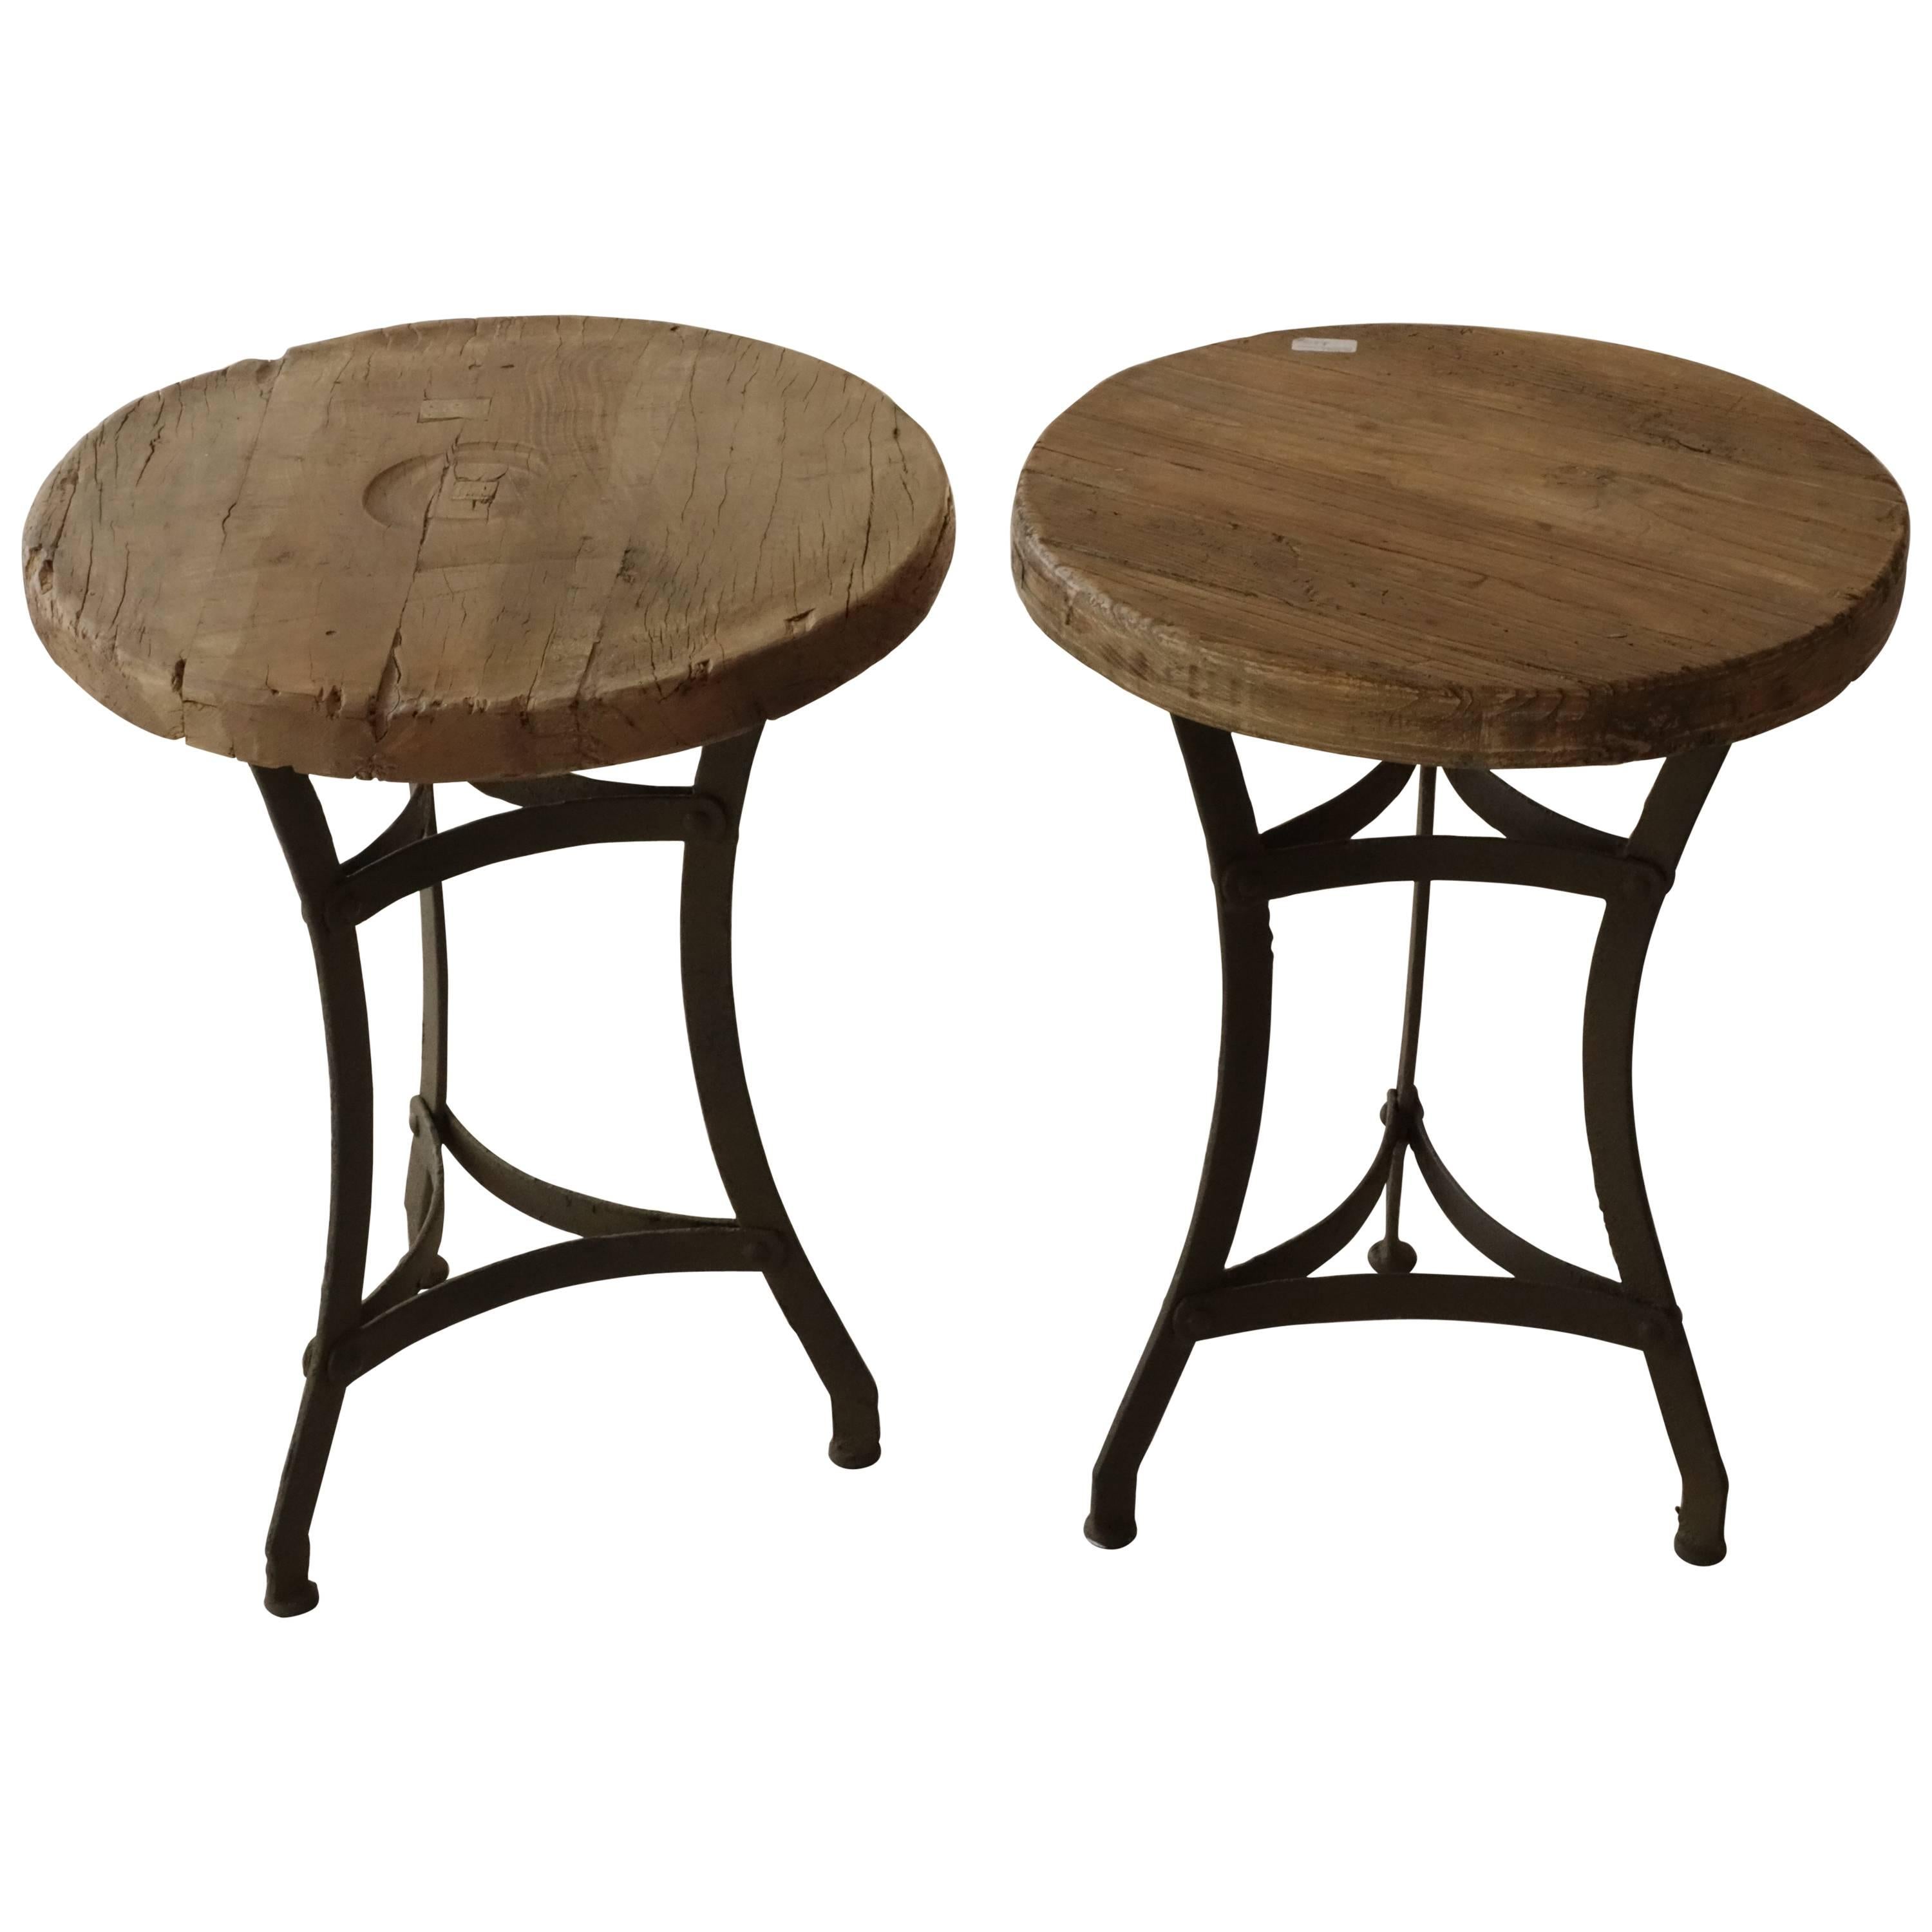 Antique Wood Side Tables For Sale